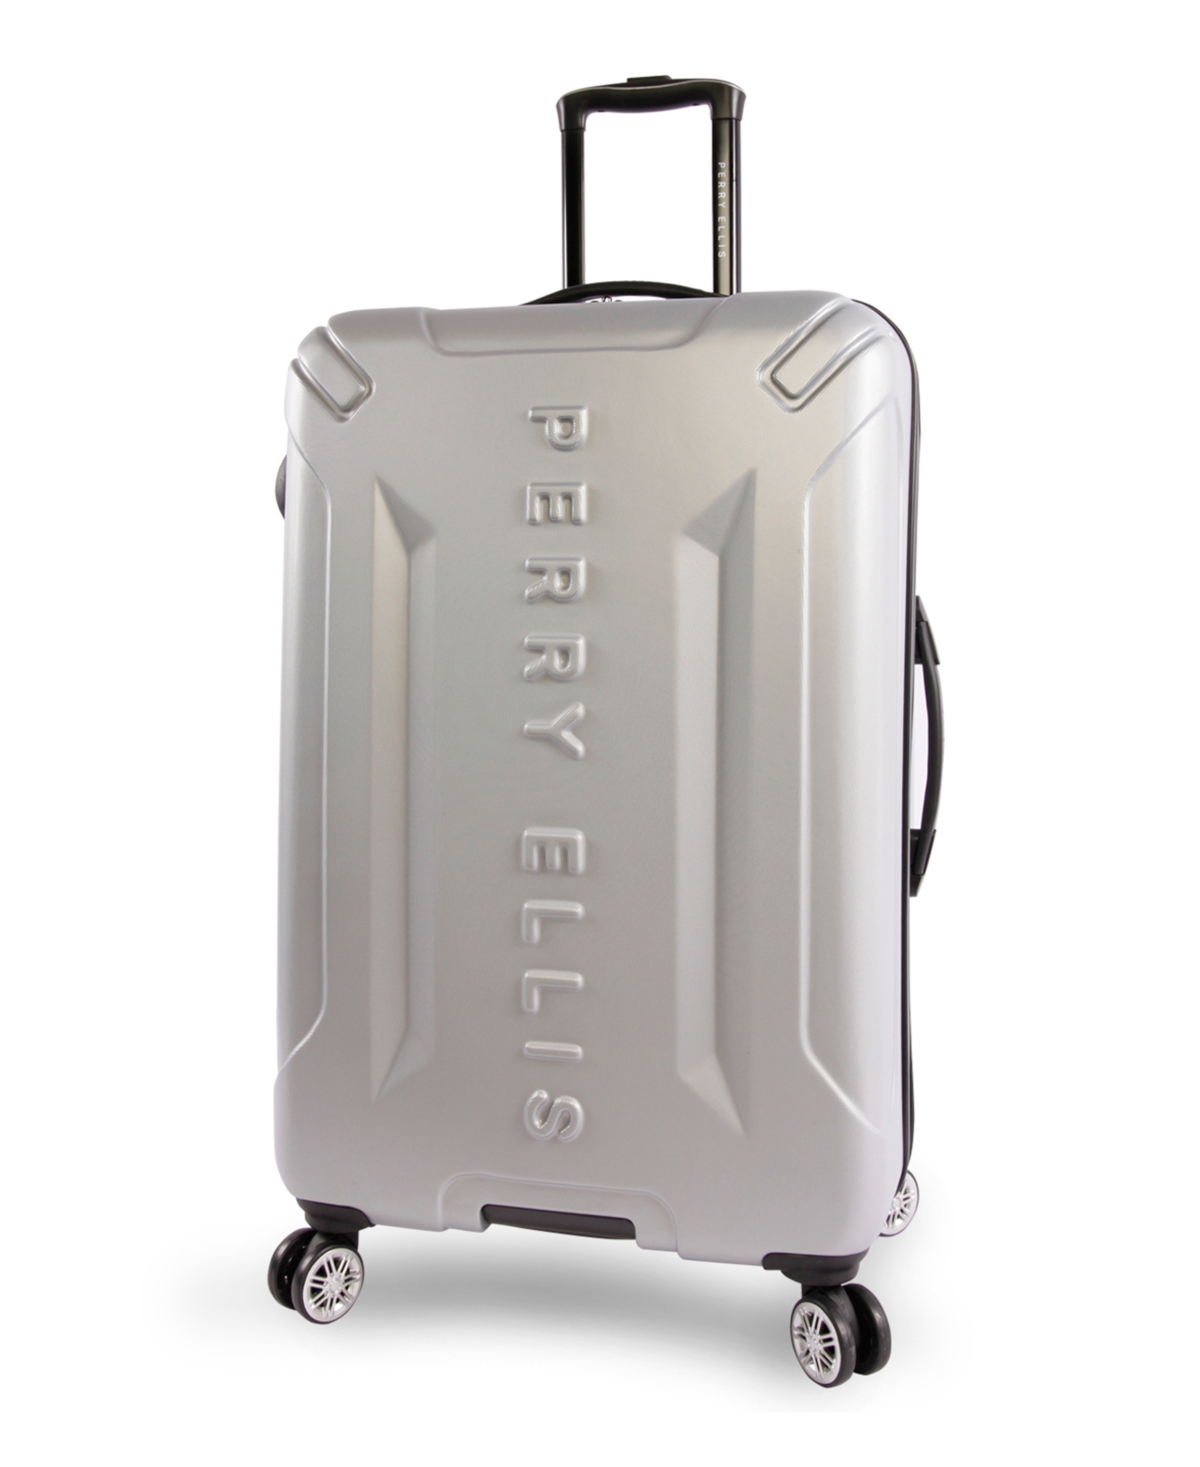 Delancey Ii 29" Spinner Luggage - Silver